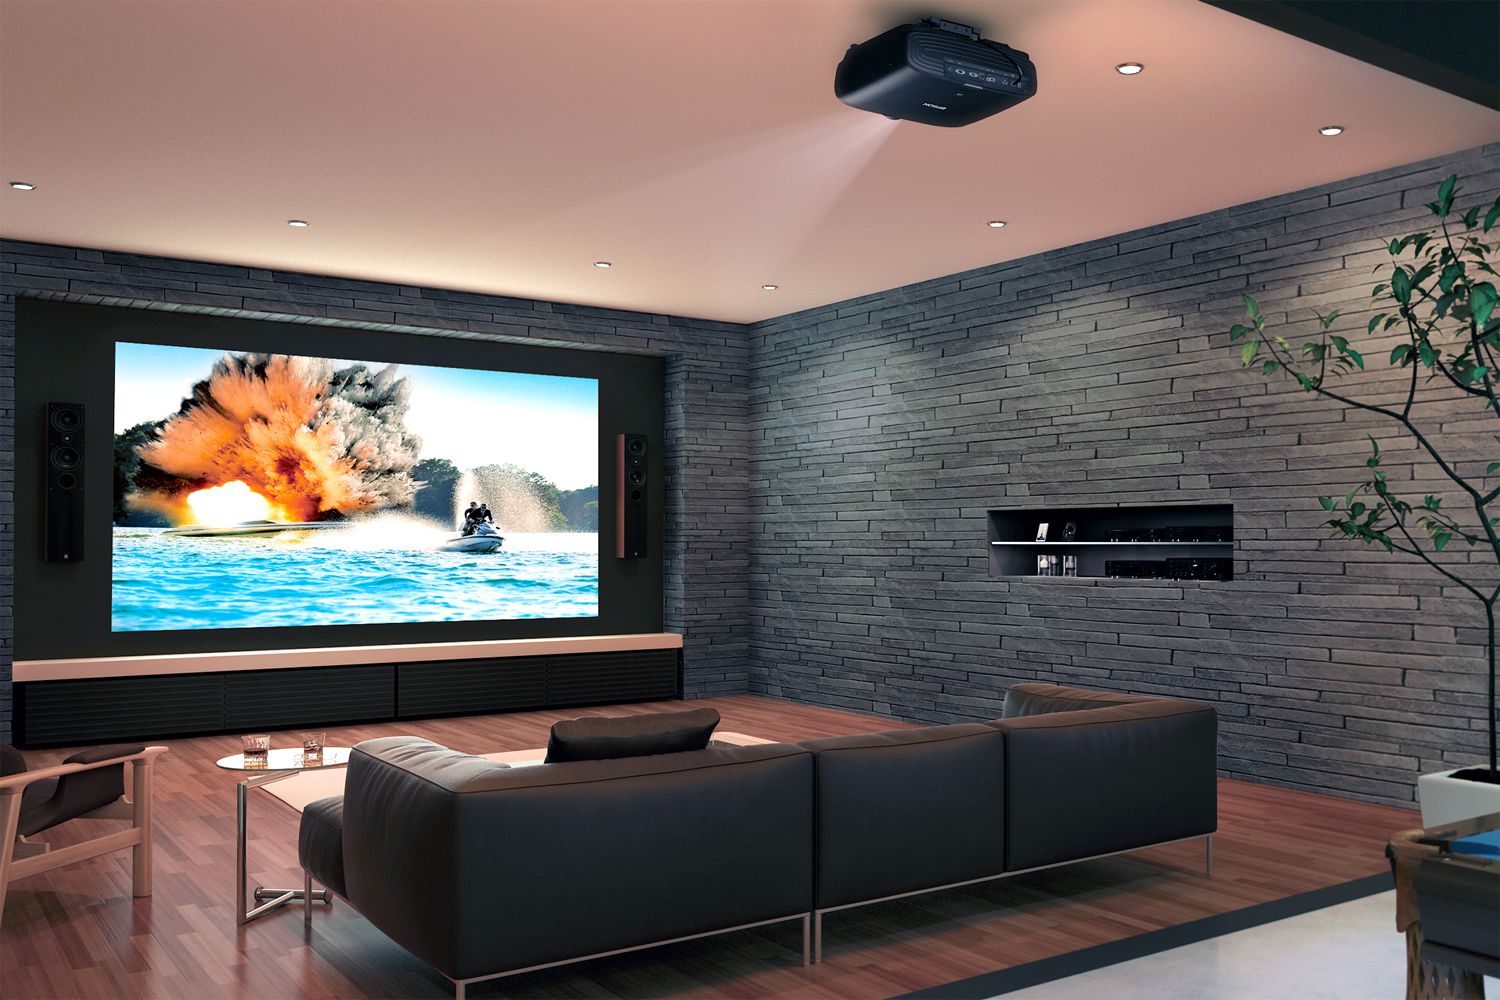 4k Projector Vs Tv For Living Room